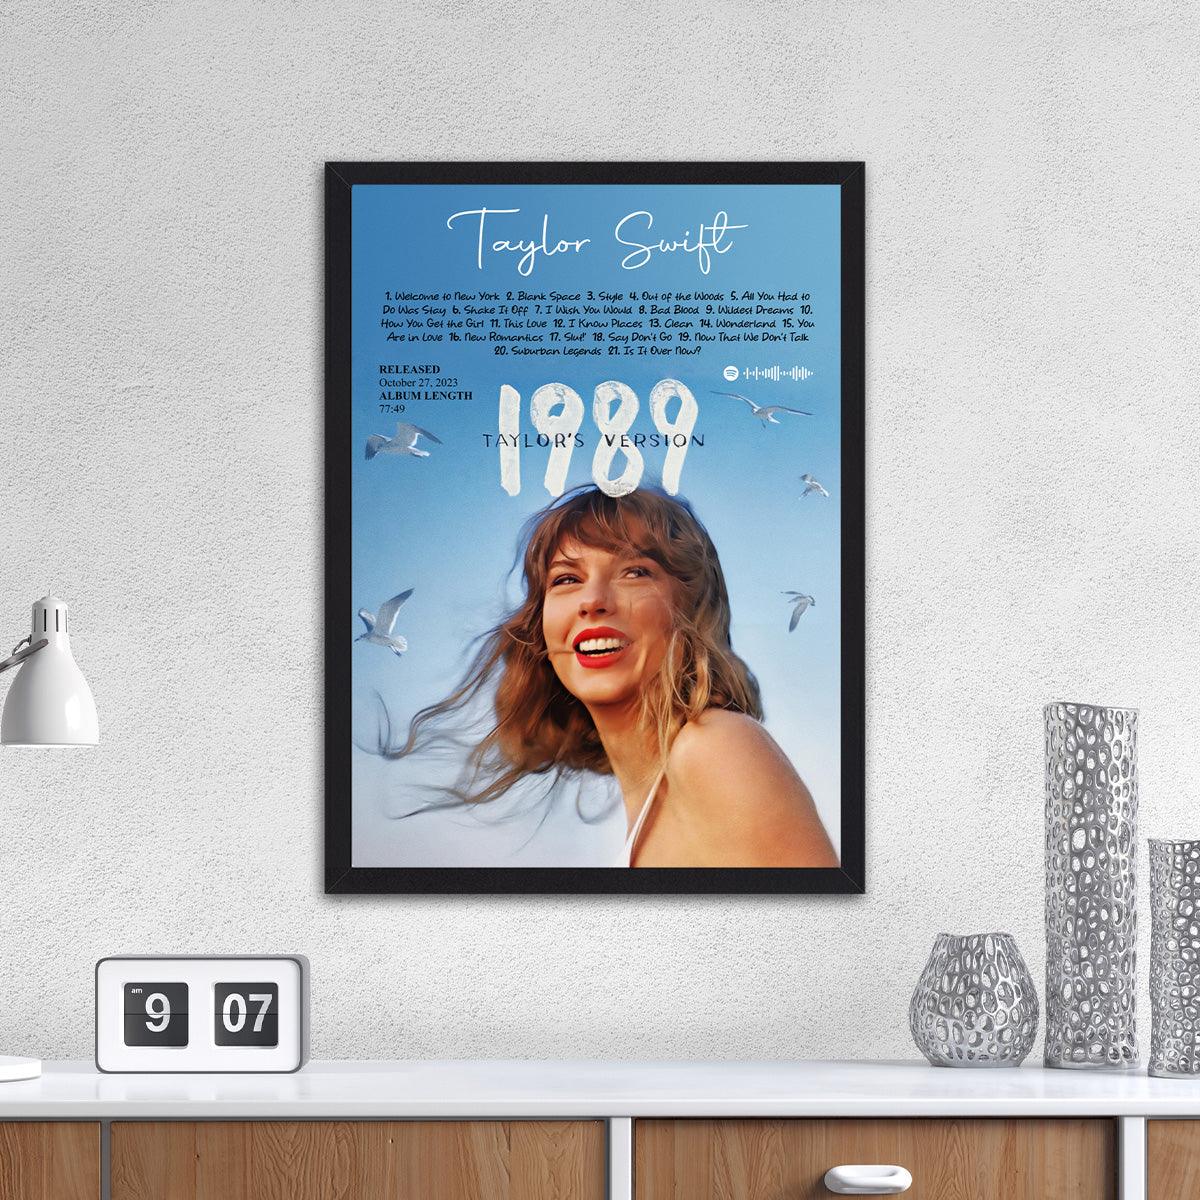 Taylor Swift's "1989" Taylor's Version - HD Metal Print - PixMagic